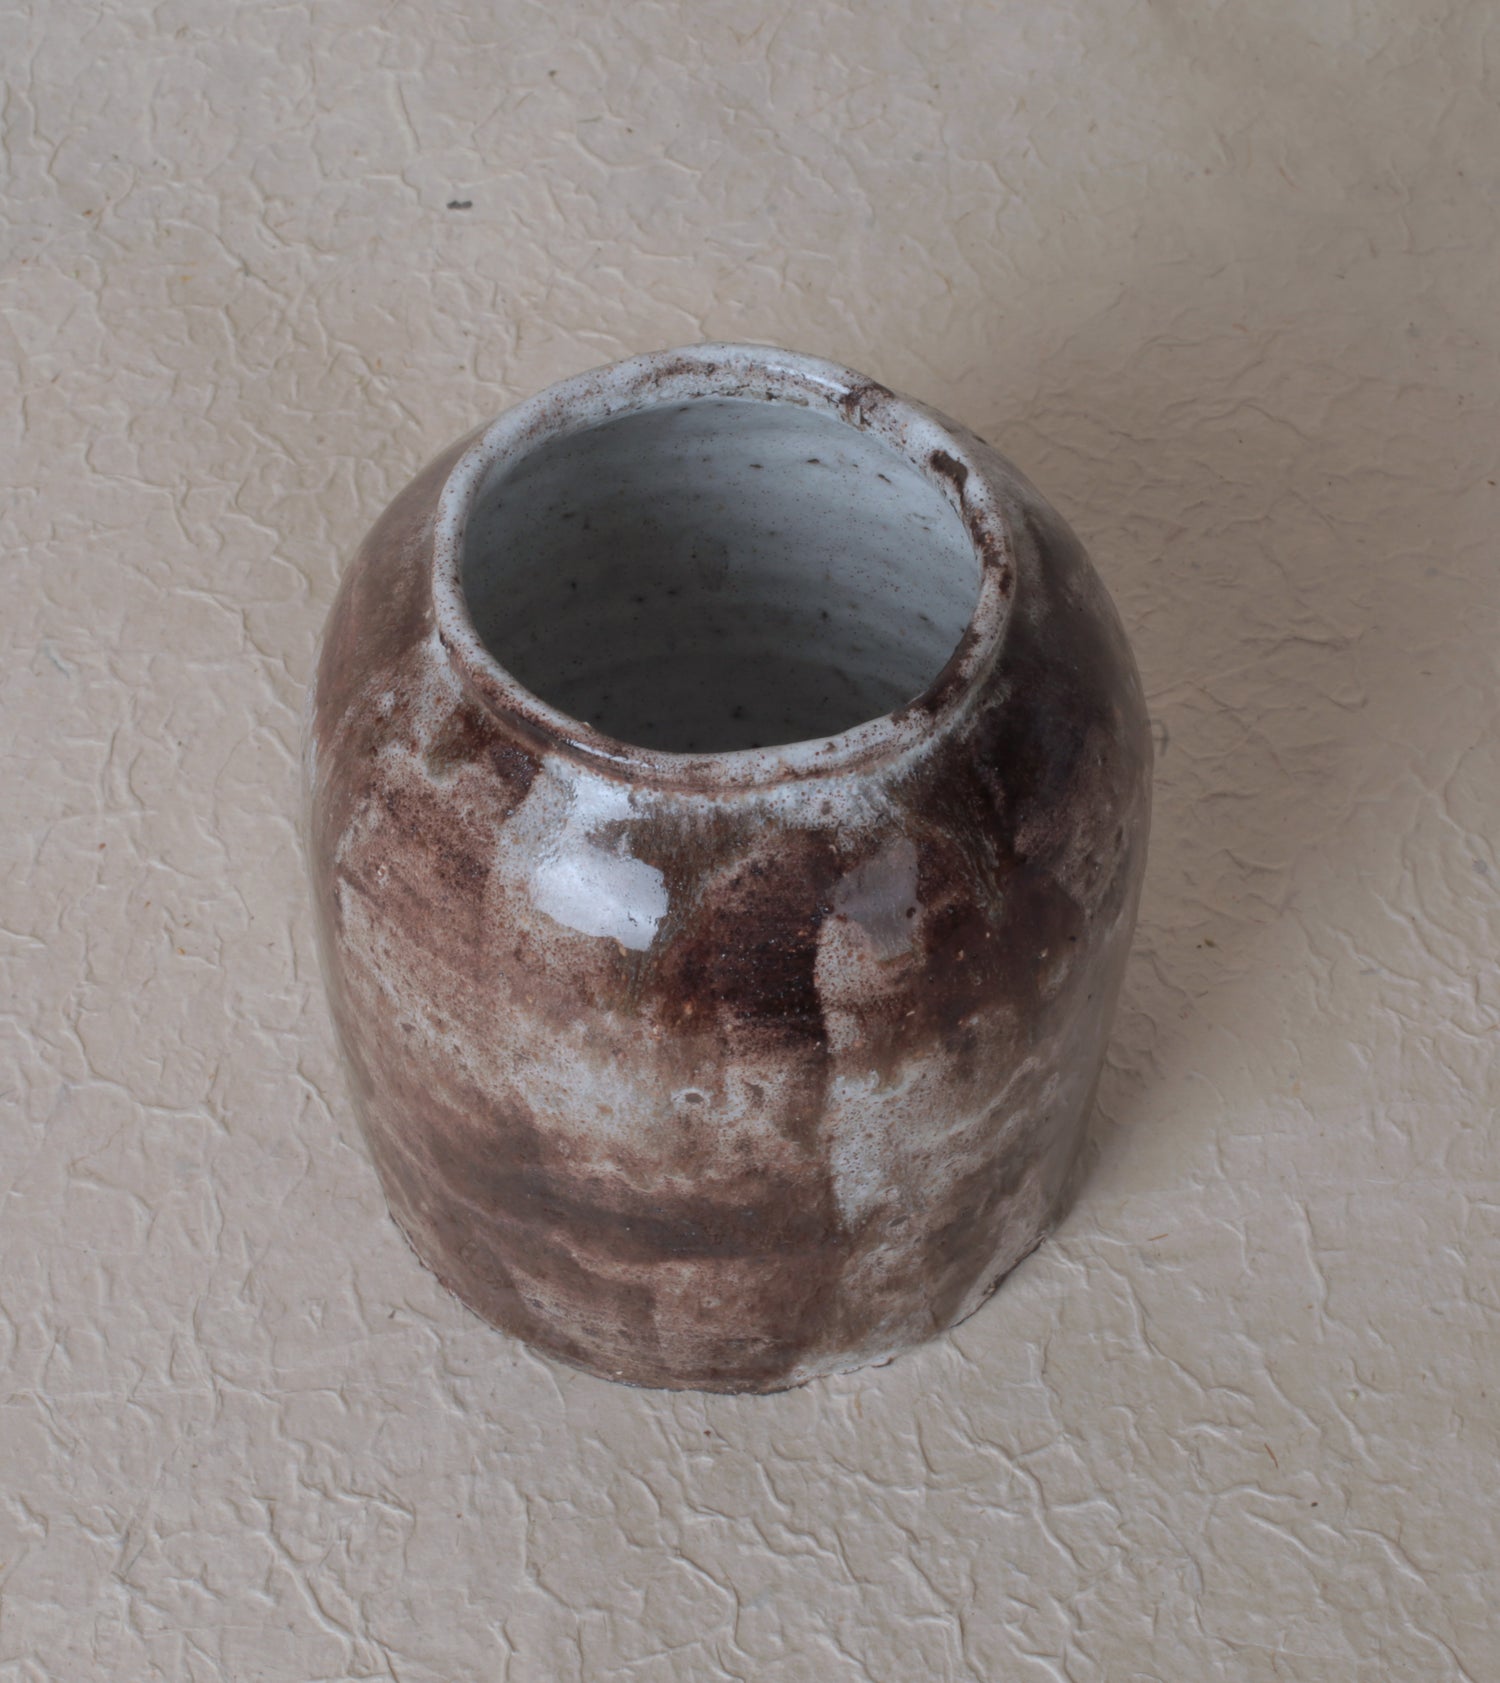 Stoneware "Pelage de Loup" vase by Benjamin Dosgheas